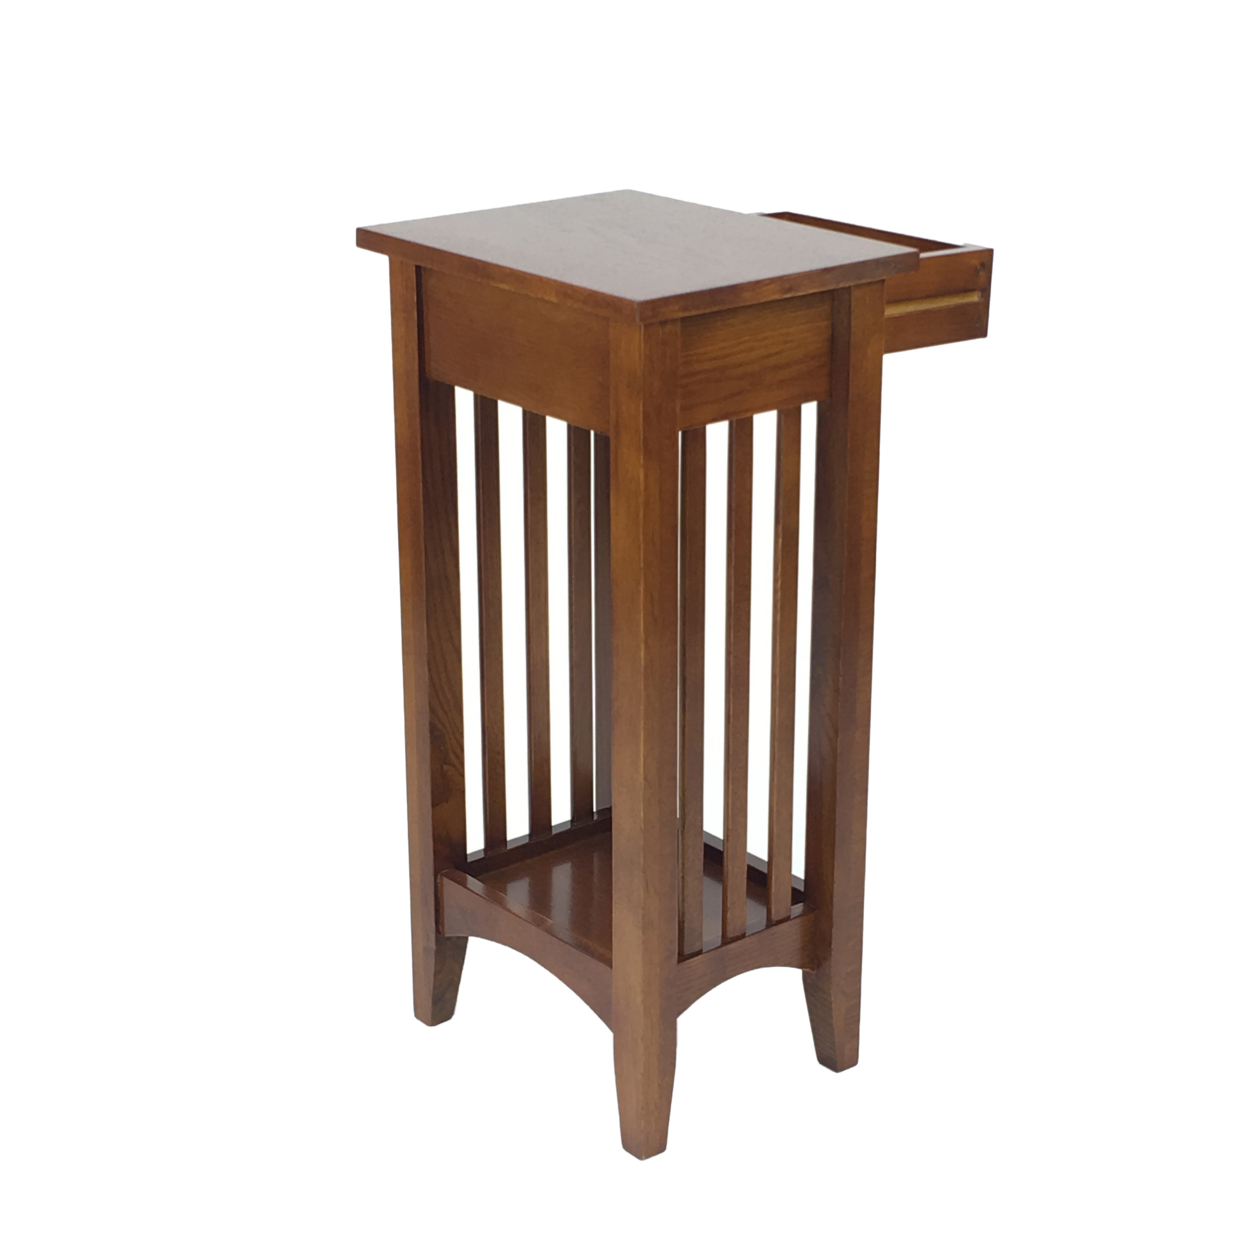 Wooden Pedestal Stand With 1 Drawer And Open Bottom Shelf, Oak Brown- Saltoro Sherpi